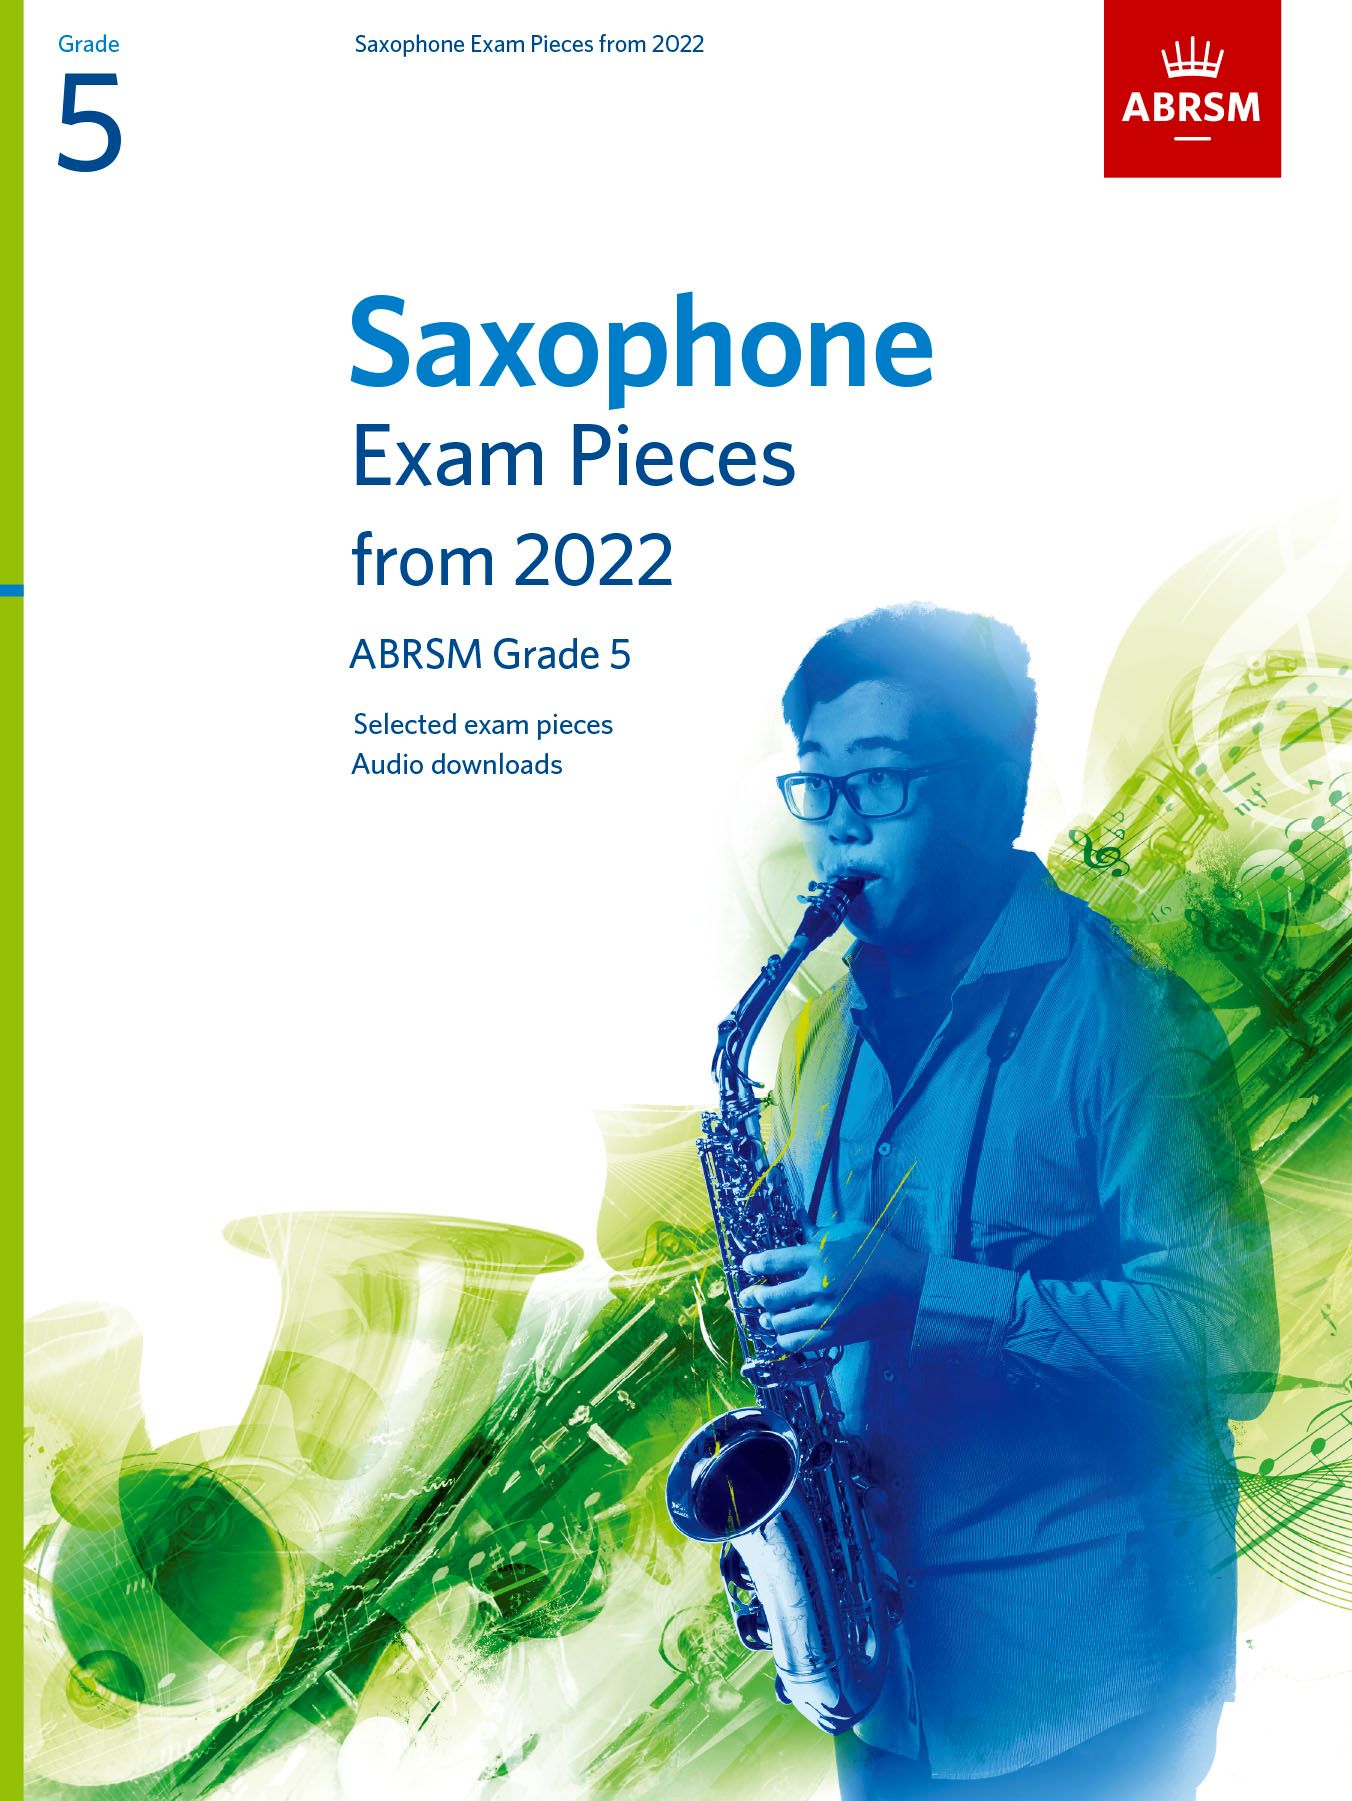 ABRSM Saxophone Exam Pieces from 2022, Grade 5